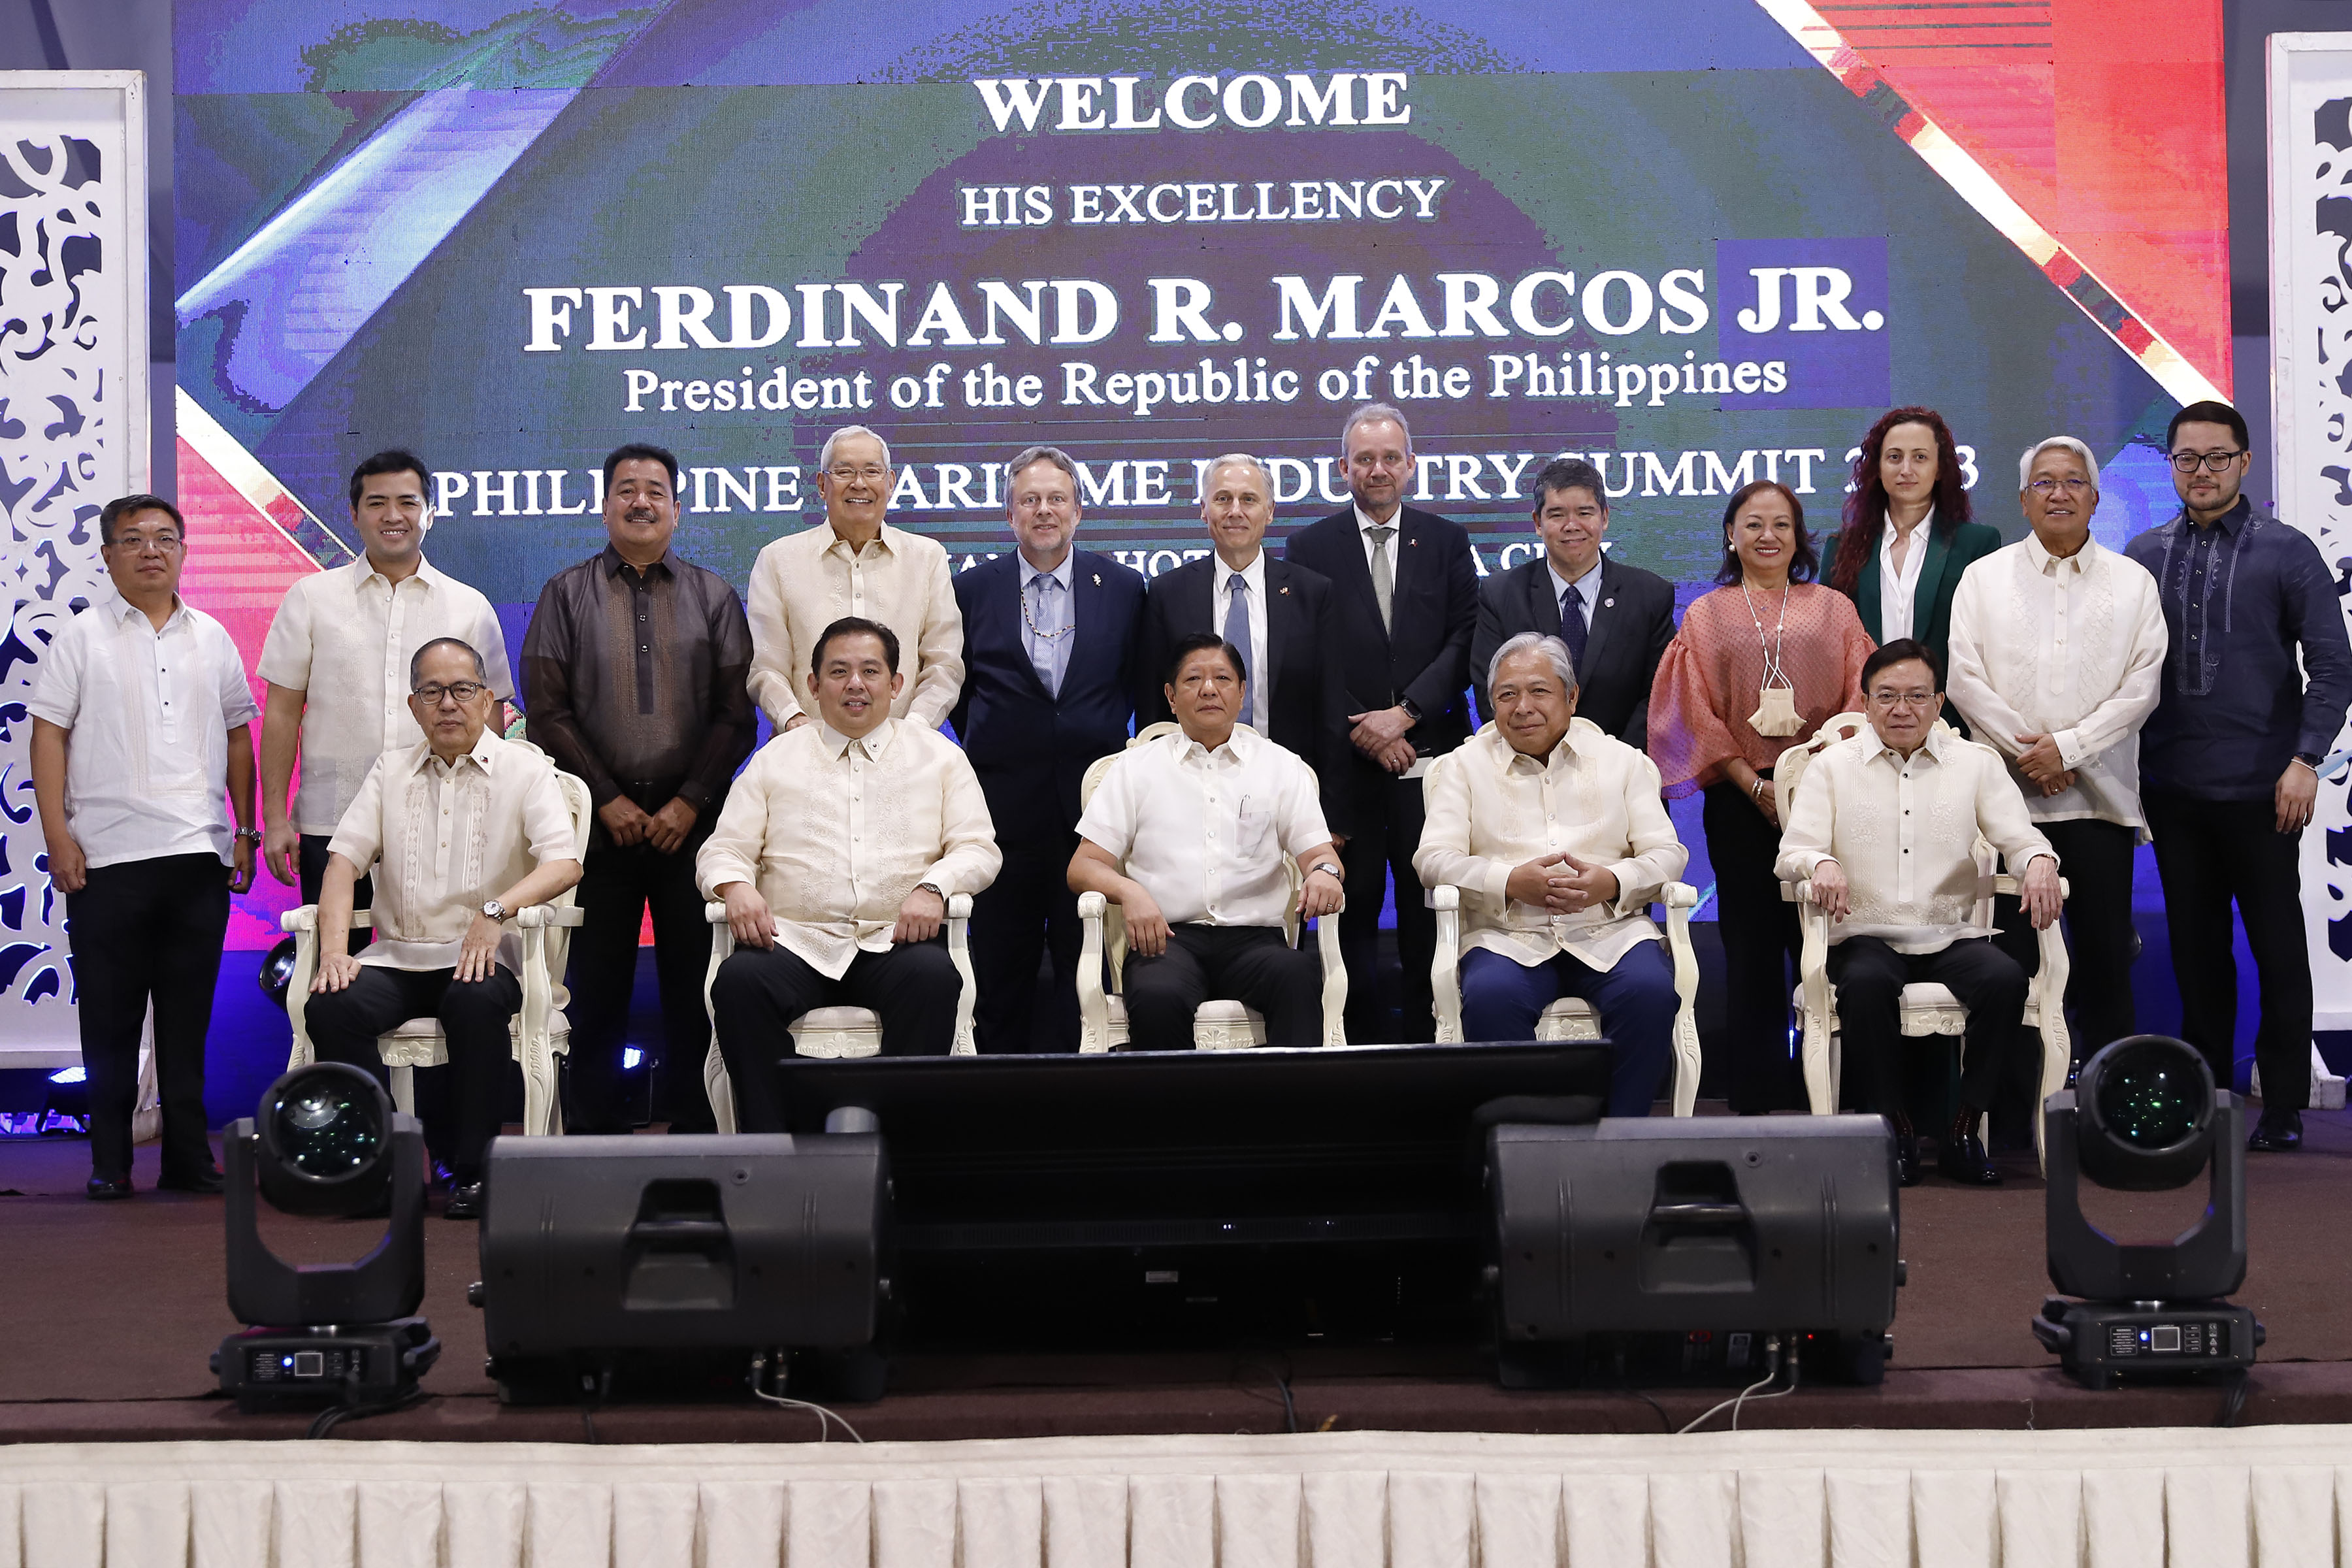 President Ferdinand R. Marcos Jr. keynotes the Philippine Maritime Industry Summit 2023